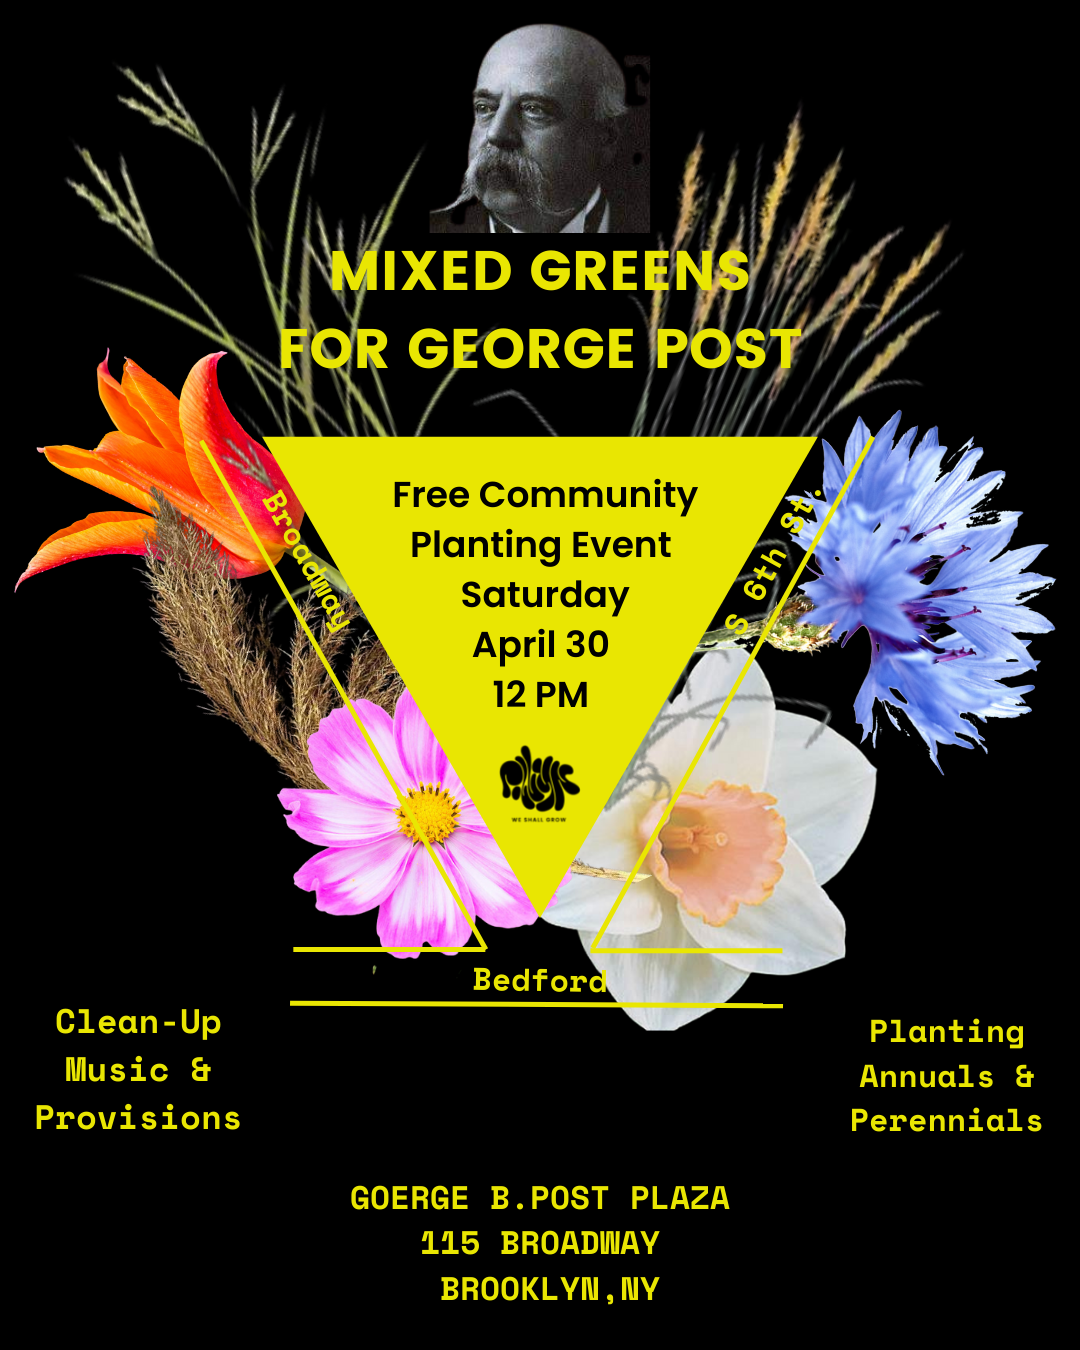 Community Planting Event - Saturday, April 30 - 12 pm